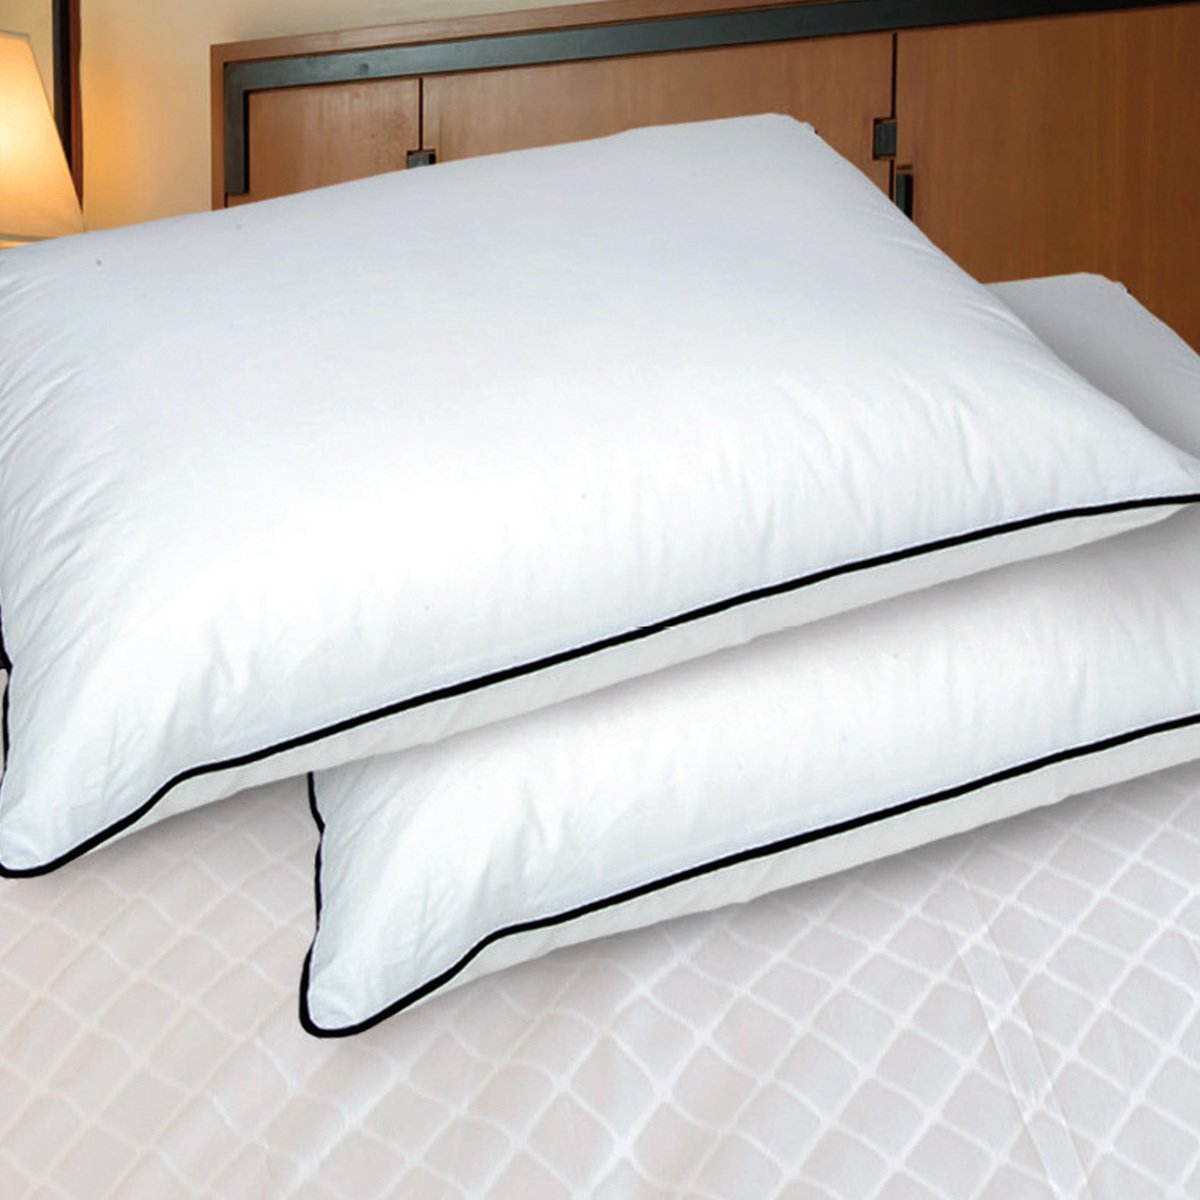 Soft Comfort Down Proof Pillow 50x75cm Per pc